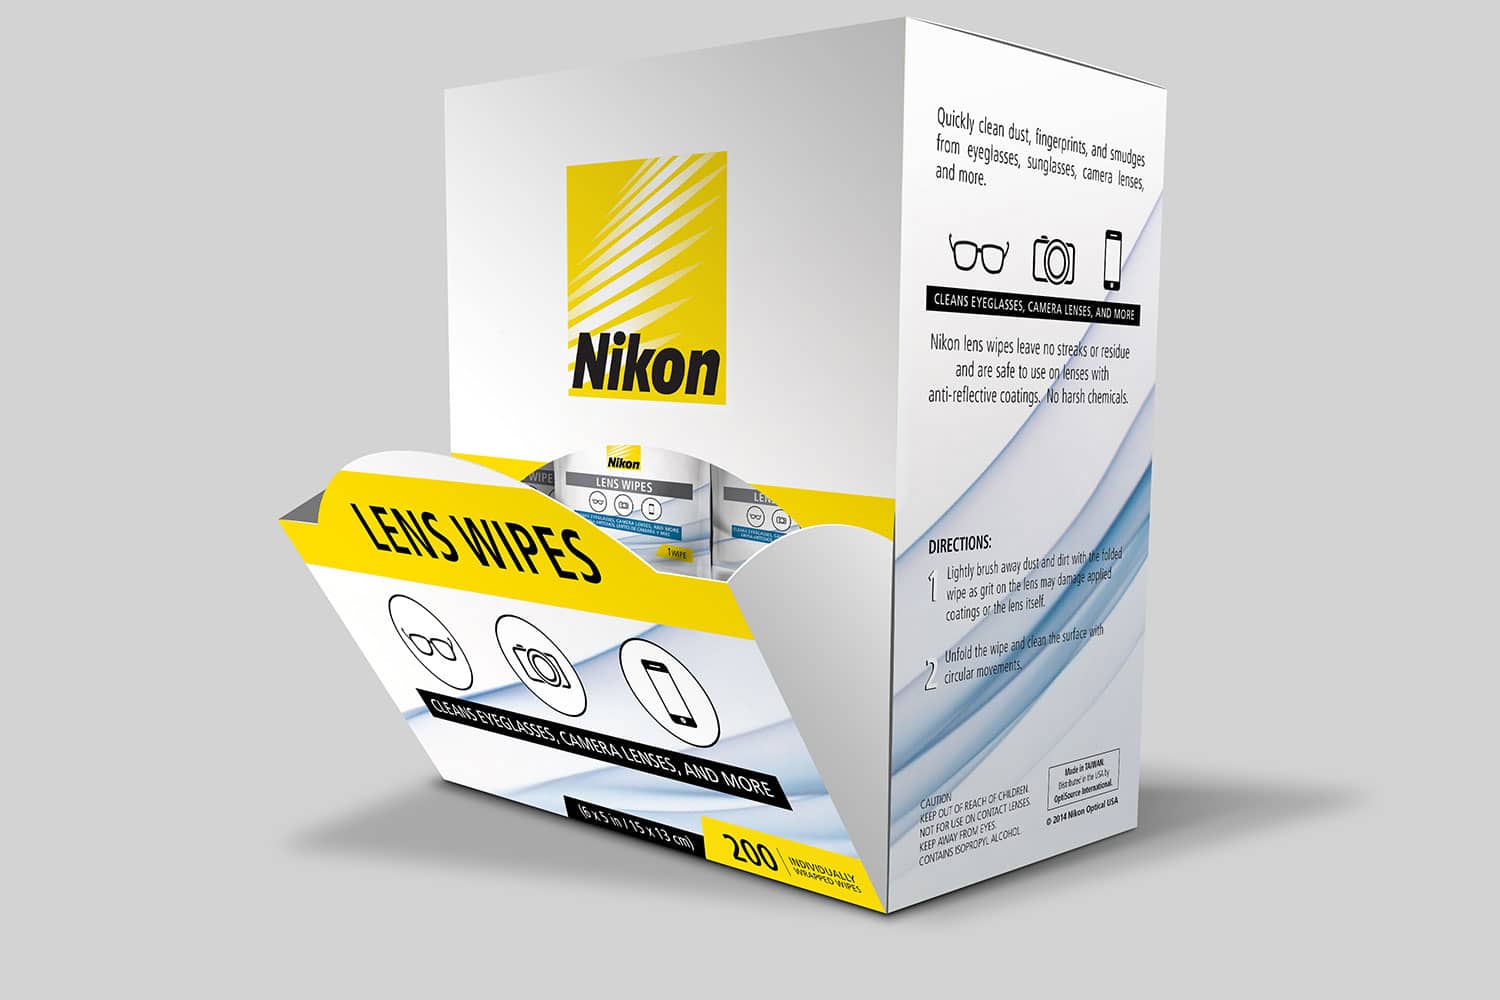 Nikon lens wipes packaging design